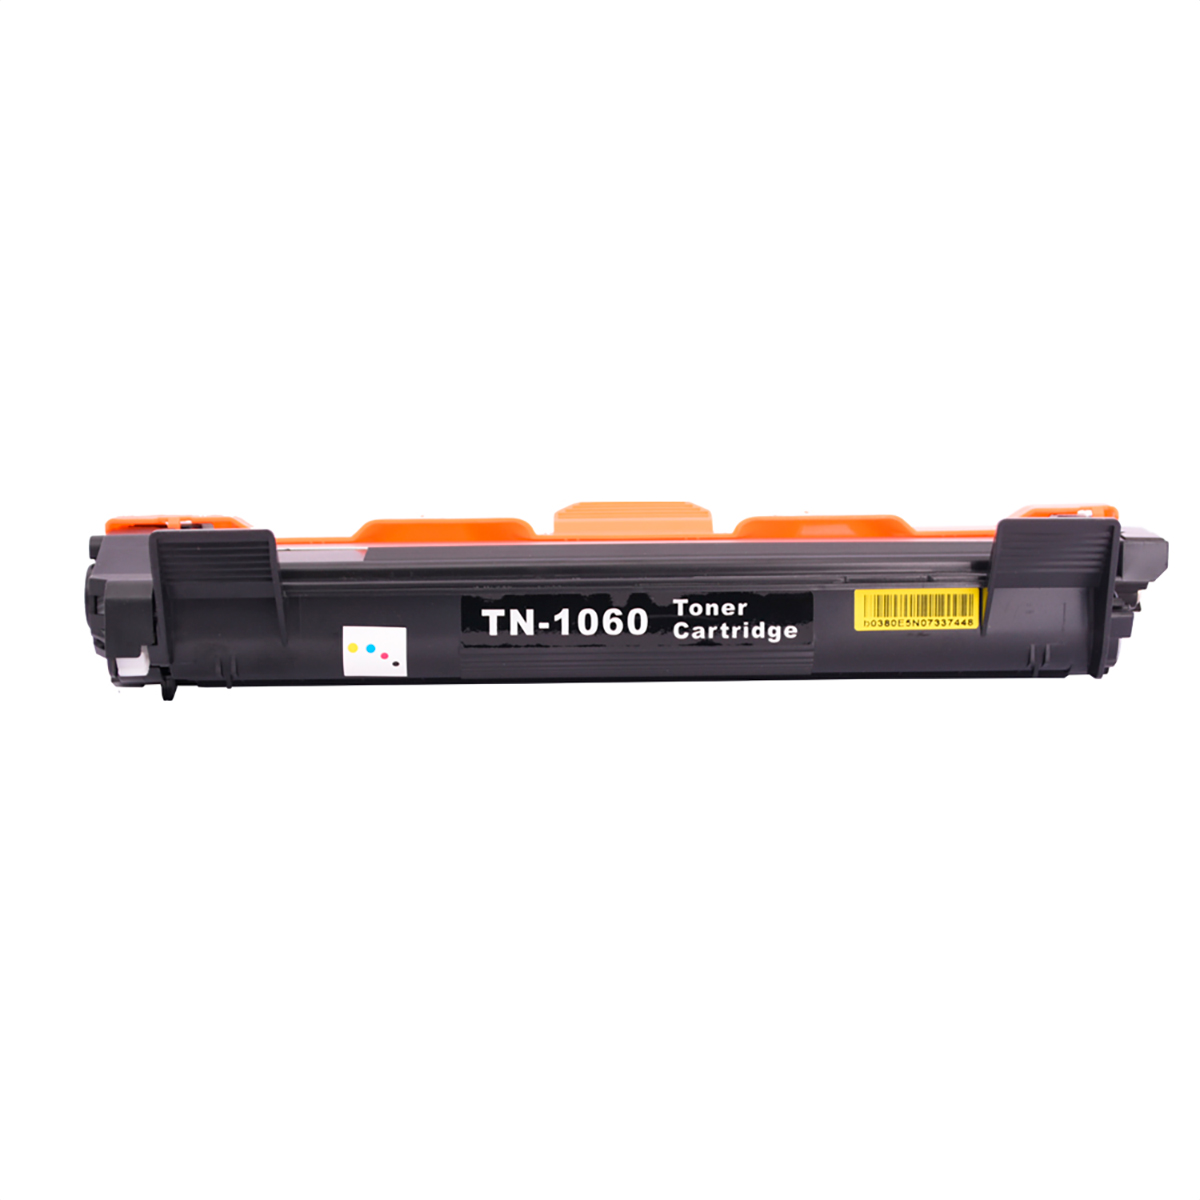 Toner Compatível TN1060 HL-1110 MFC-1815 Preto 1.5 mil paginas